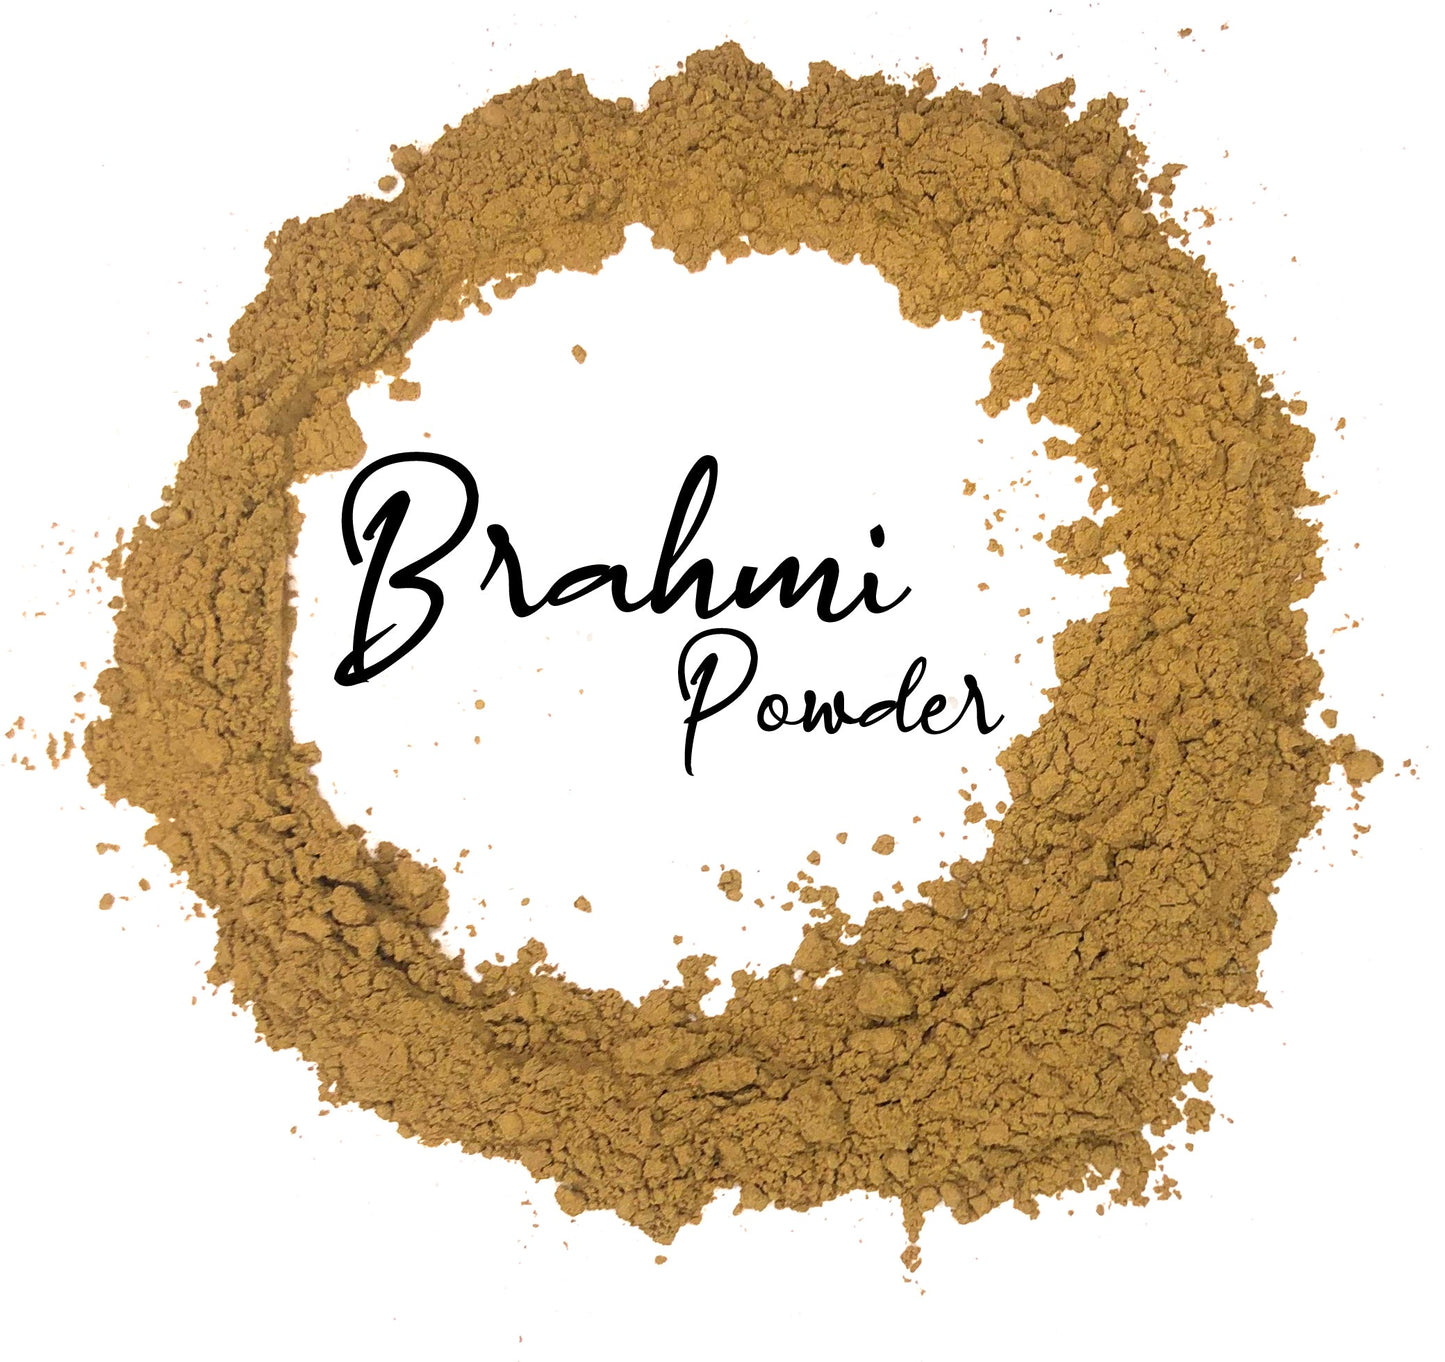 Wholesale Spices & Herbs - Brahmi (Bacopa) Powder, Organic 2.8oz(78.6g) Jar